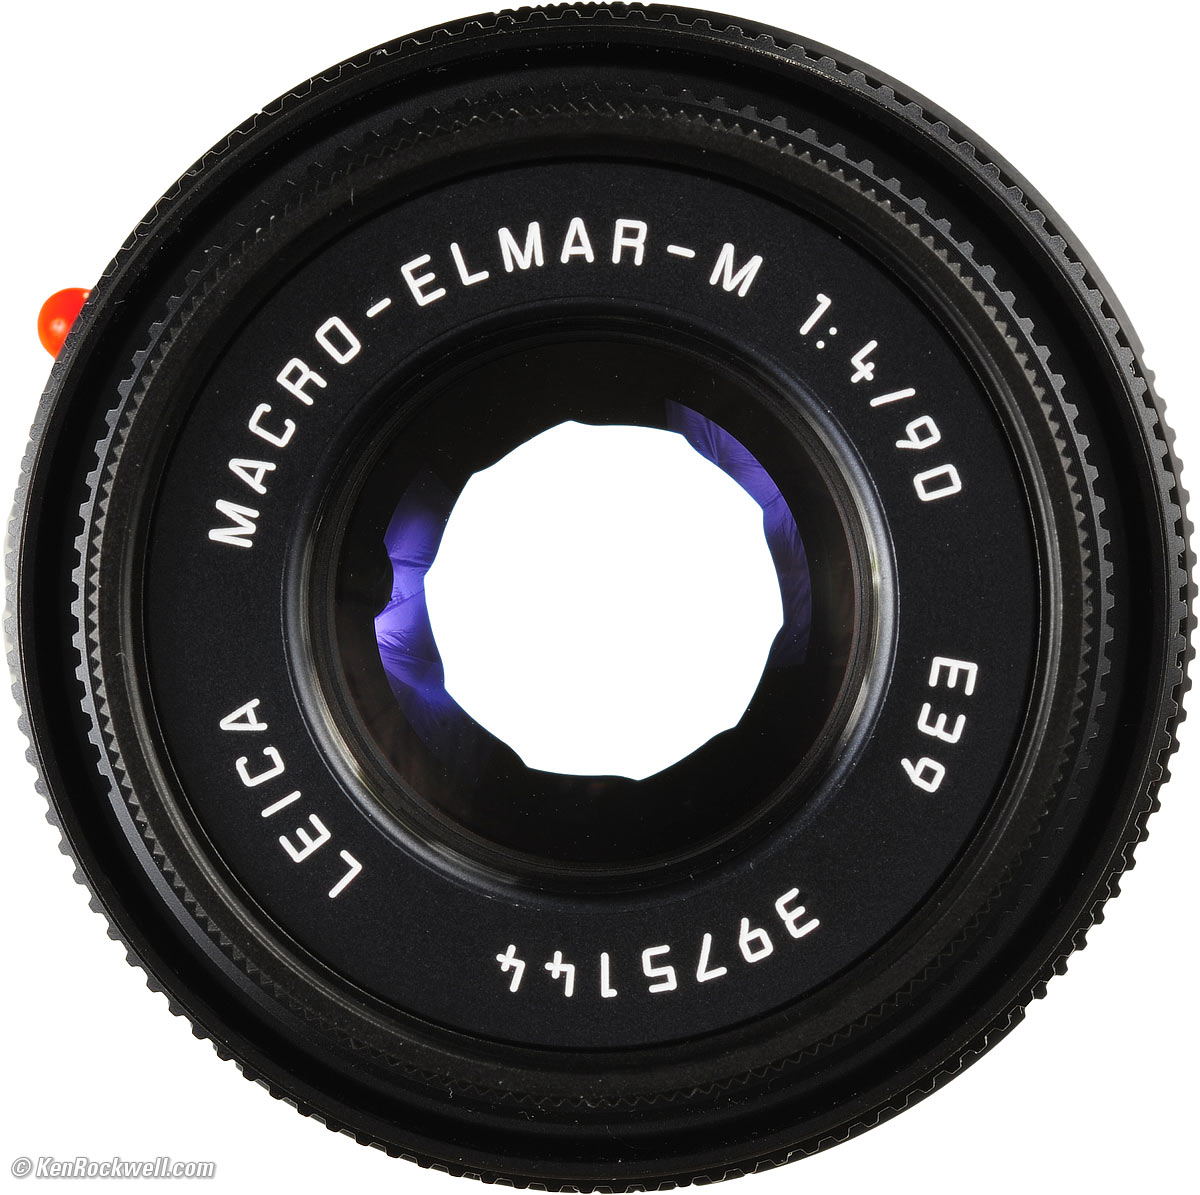 Gadget Place Black Vented Metal Lens Hood with Cap for Leica Macro-Elmar-M 90mm f/4 